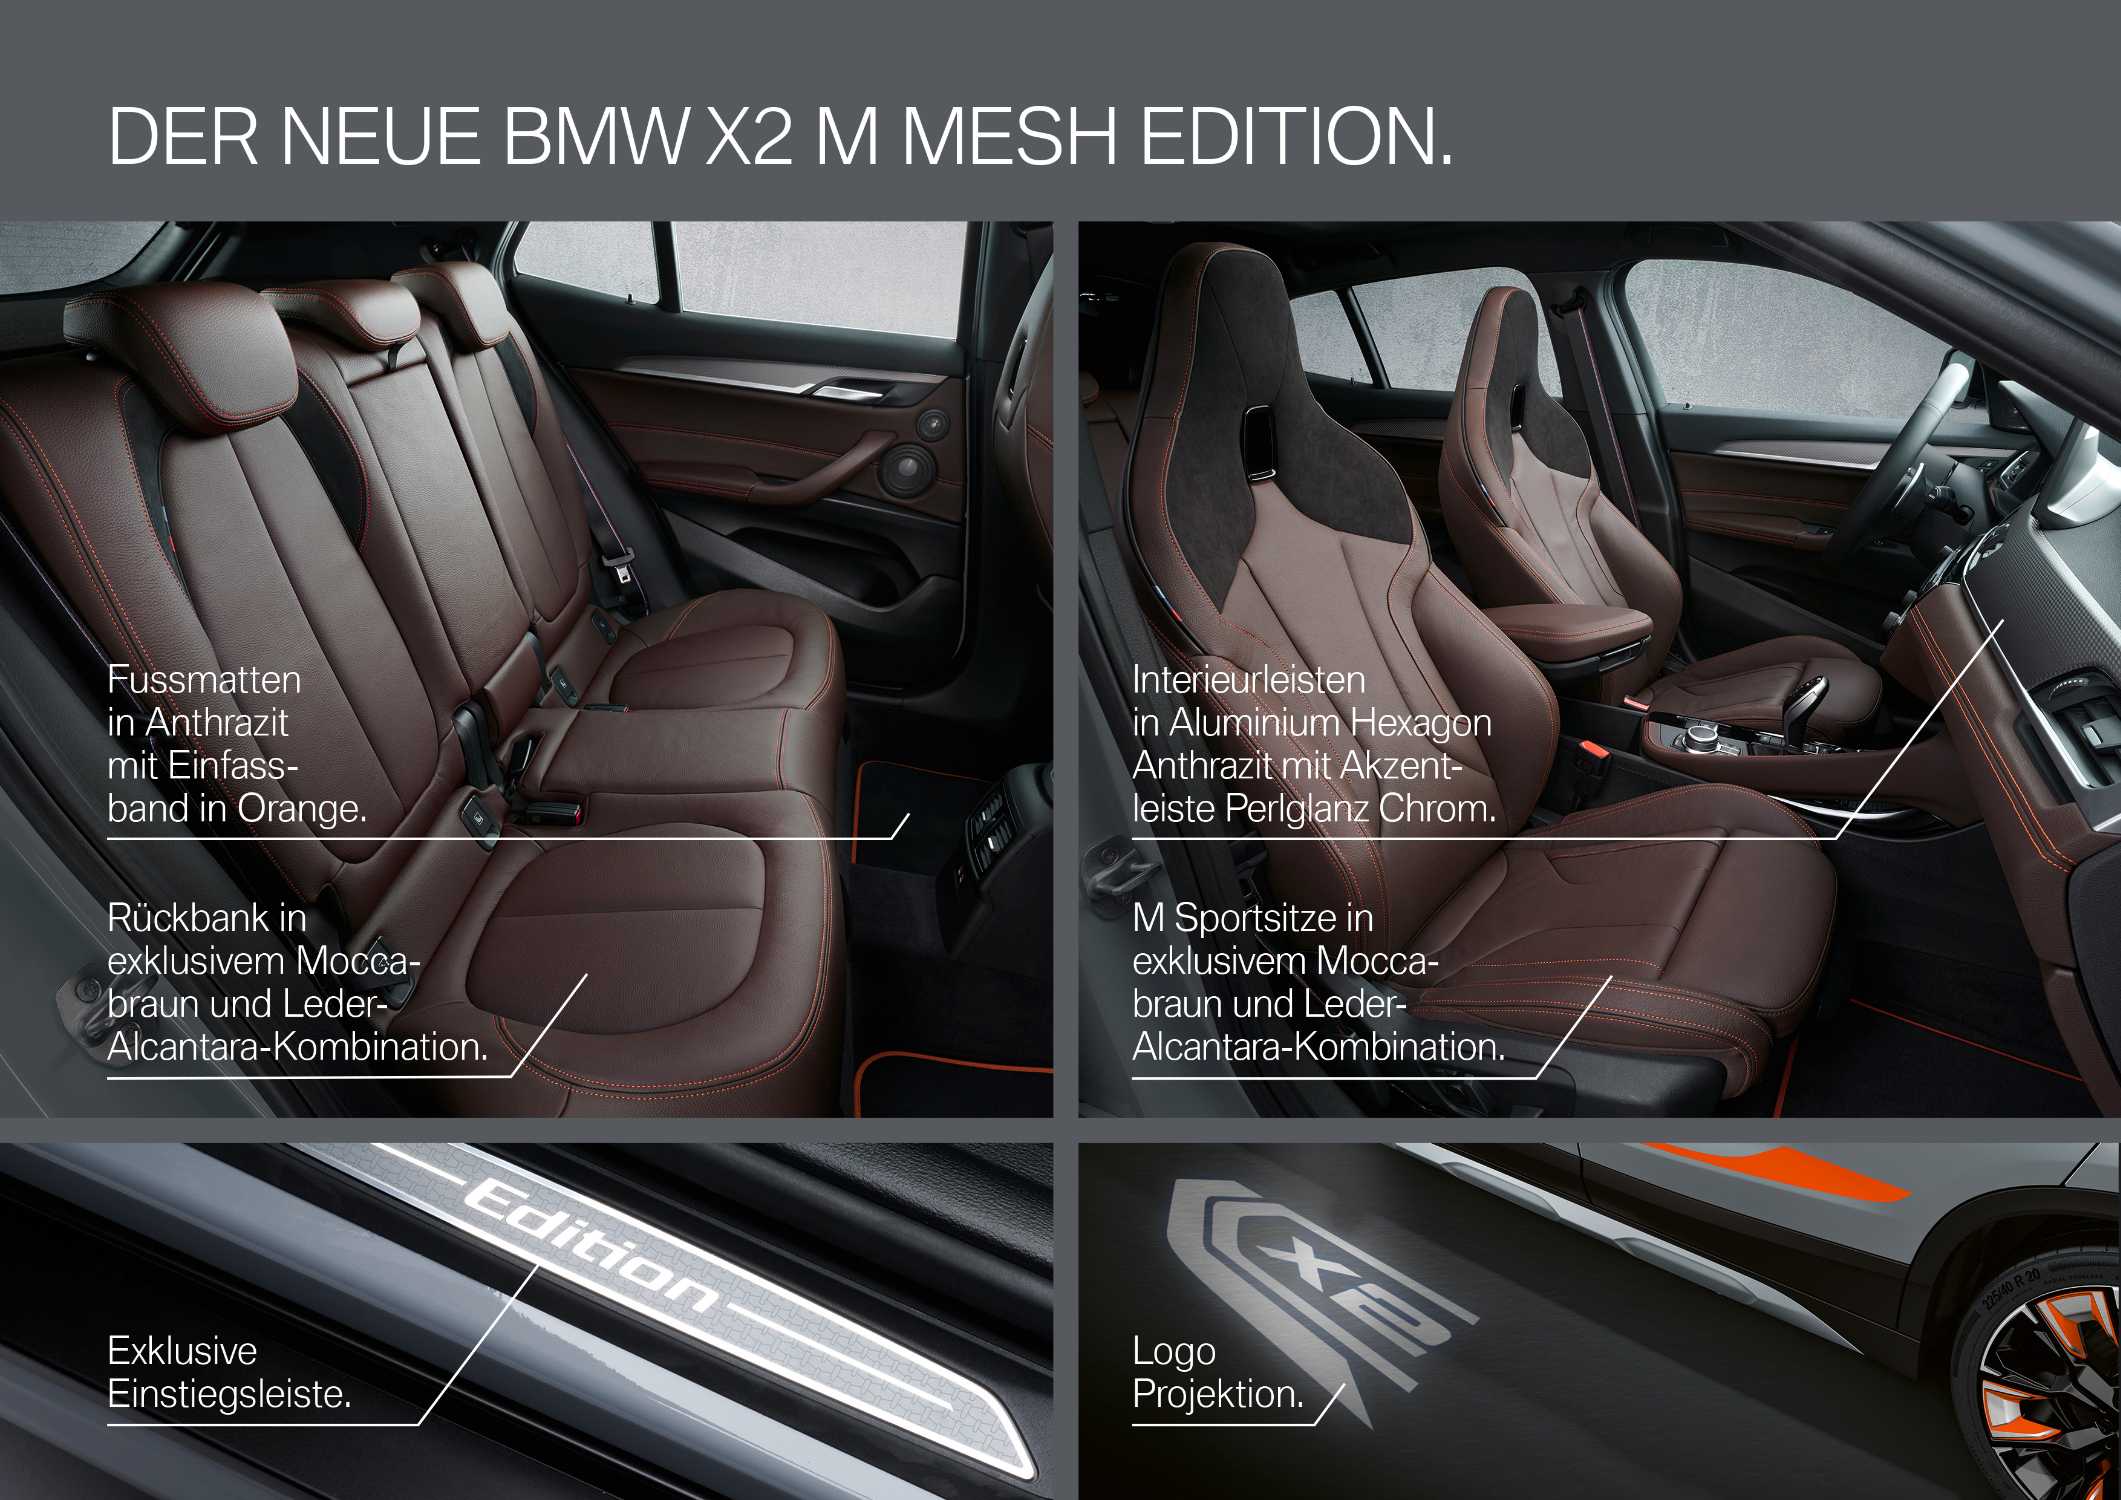 Der neue BMW X2 xDrive20i M Mesh Edition (09/2020).